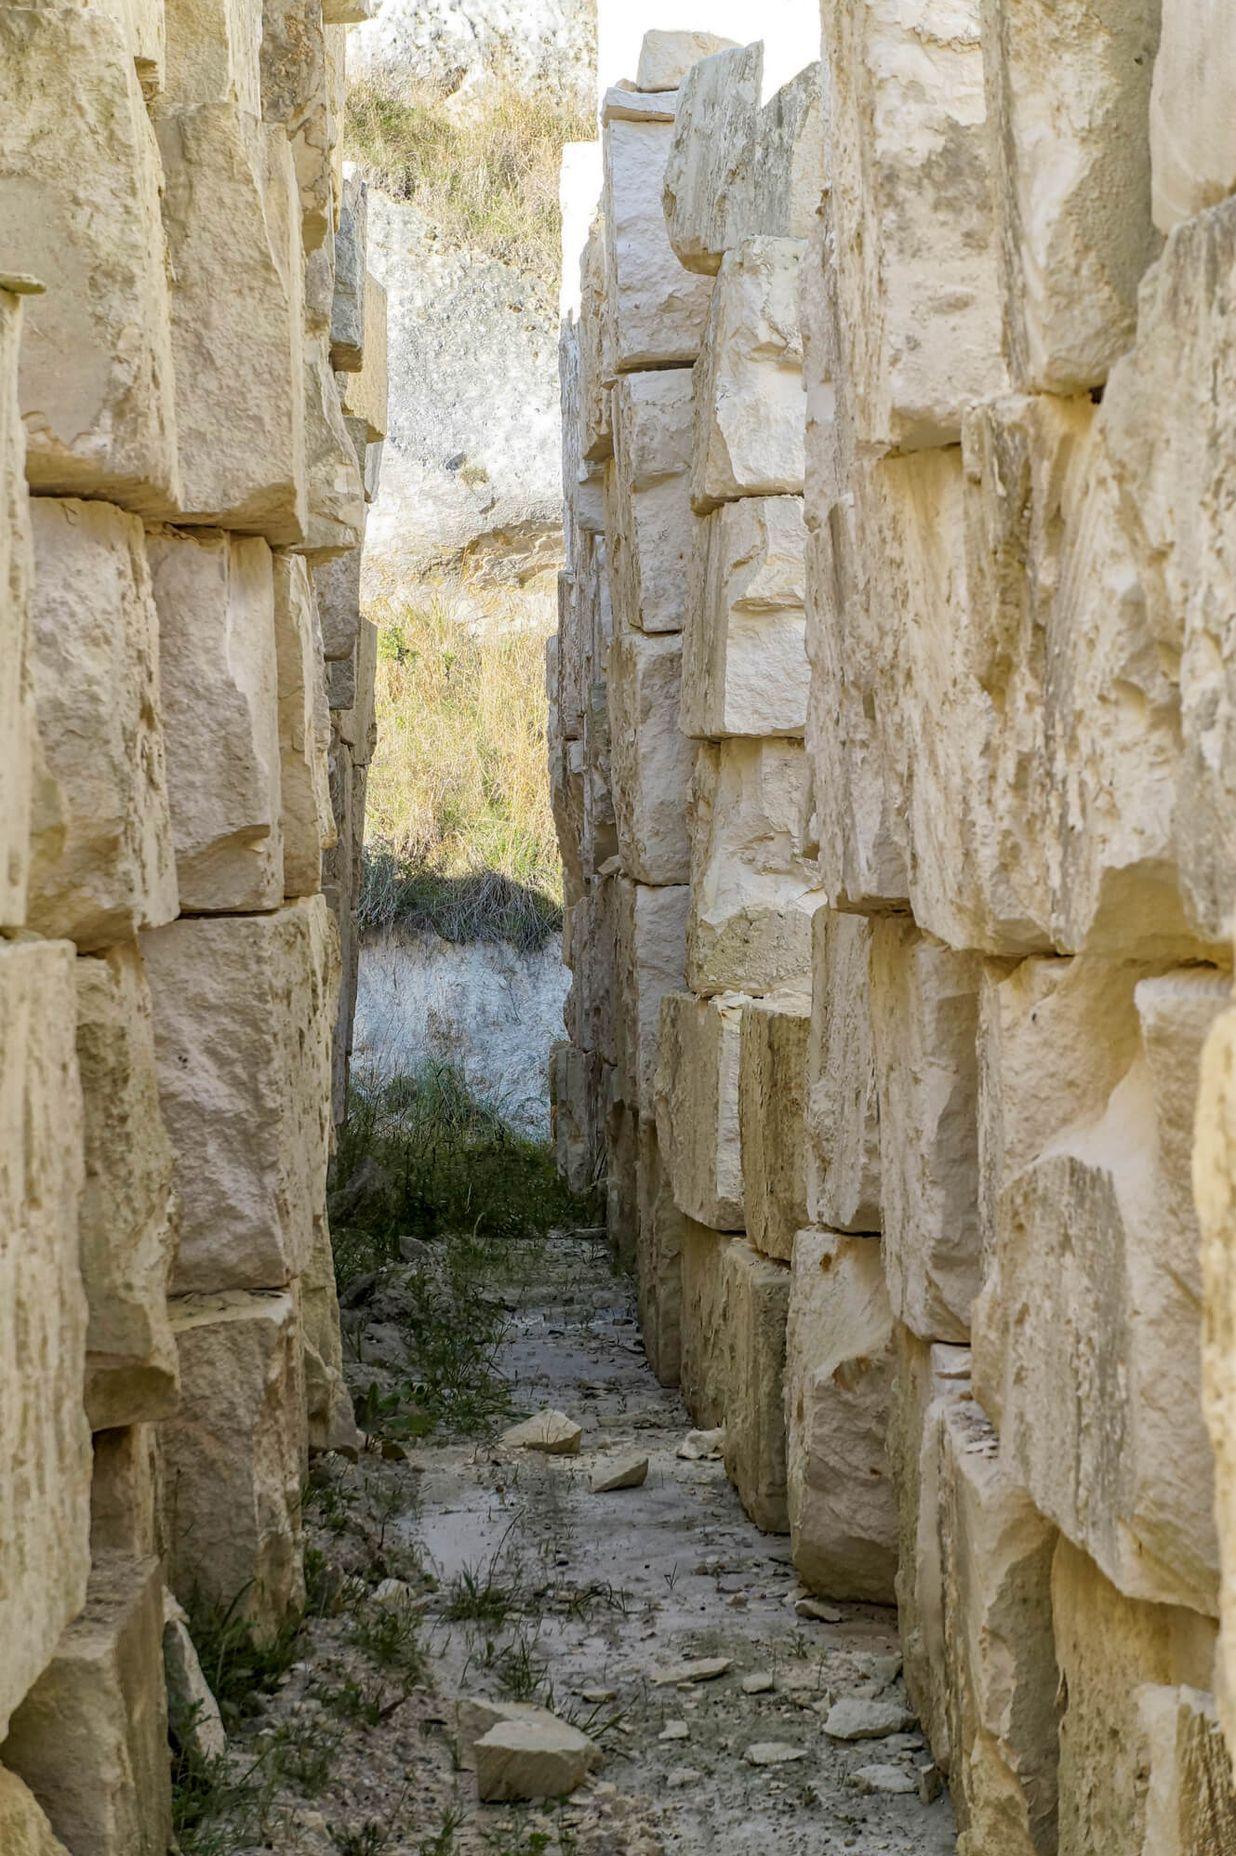 Oamaru limestone blocks drying at Parkside Quarries